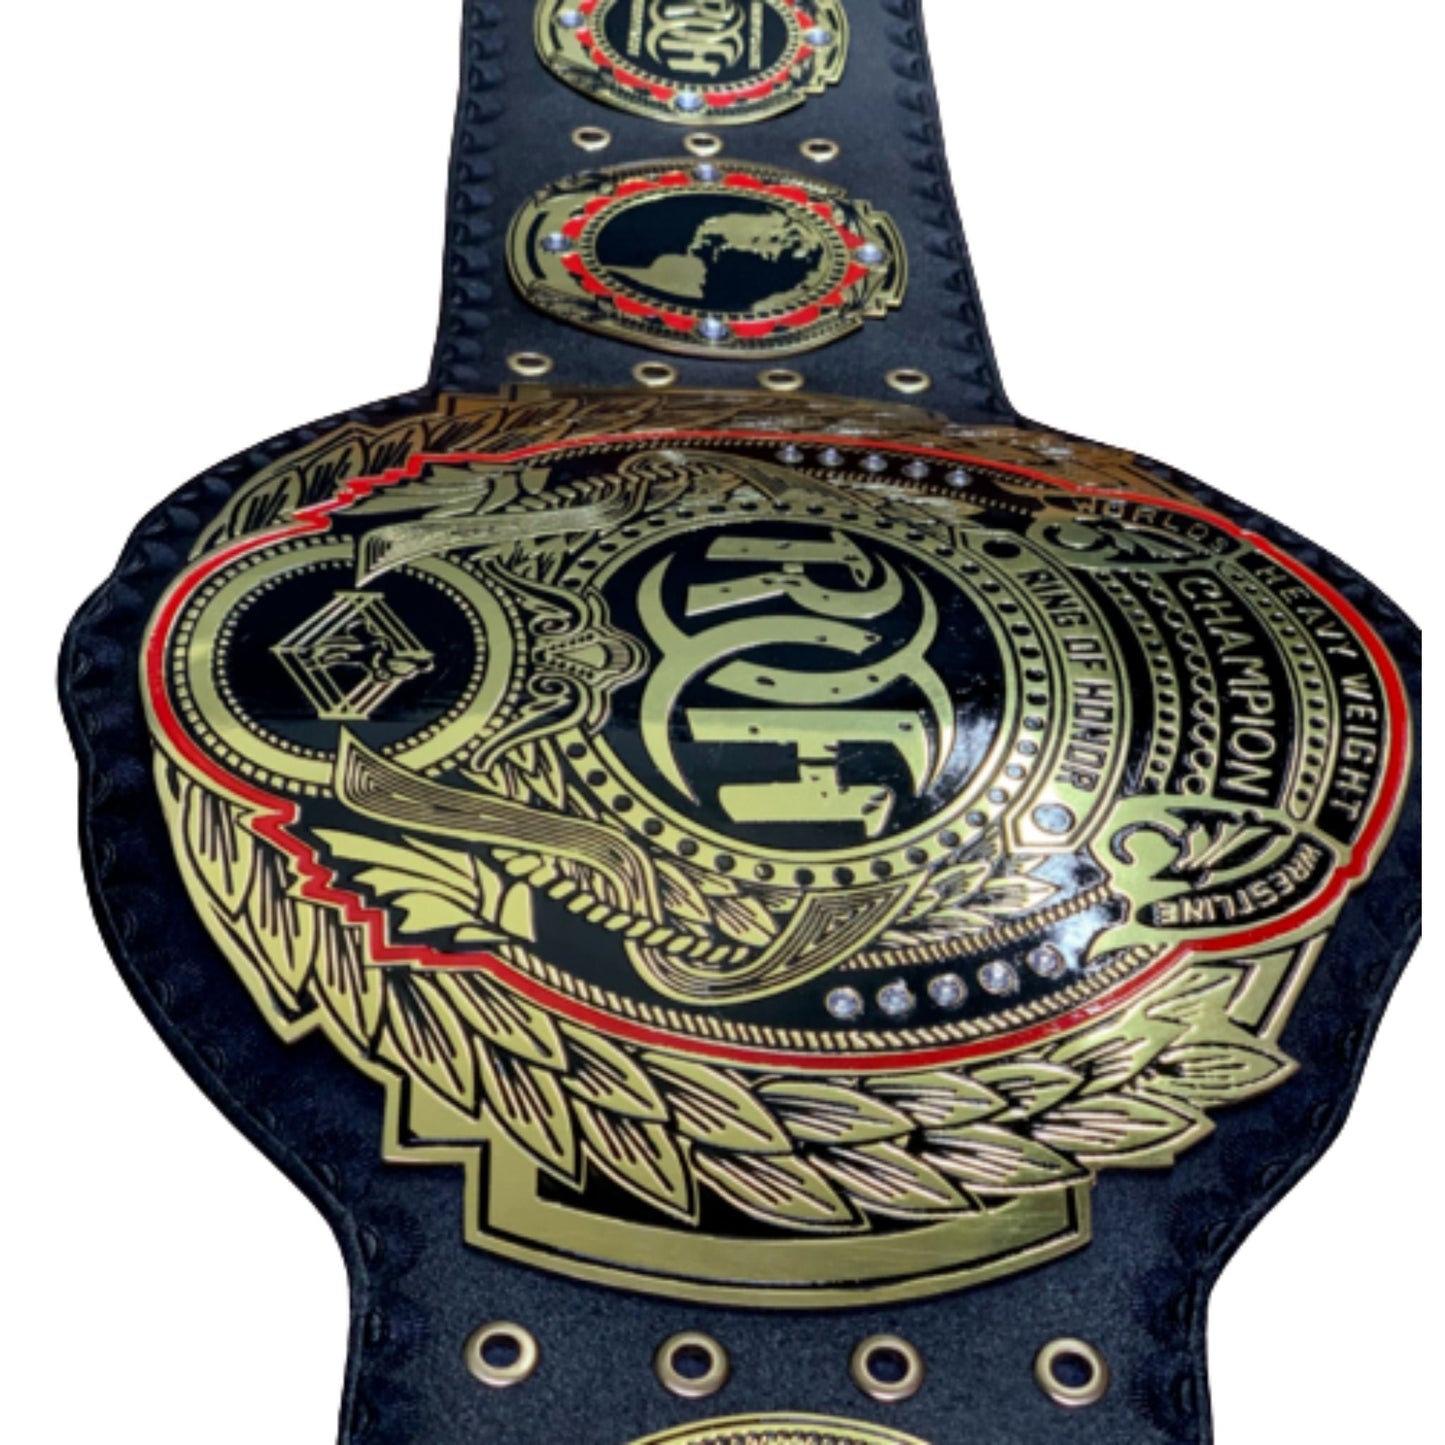 ROH Heavyweight Championship Replica Title Belt